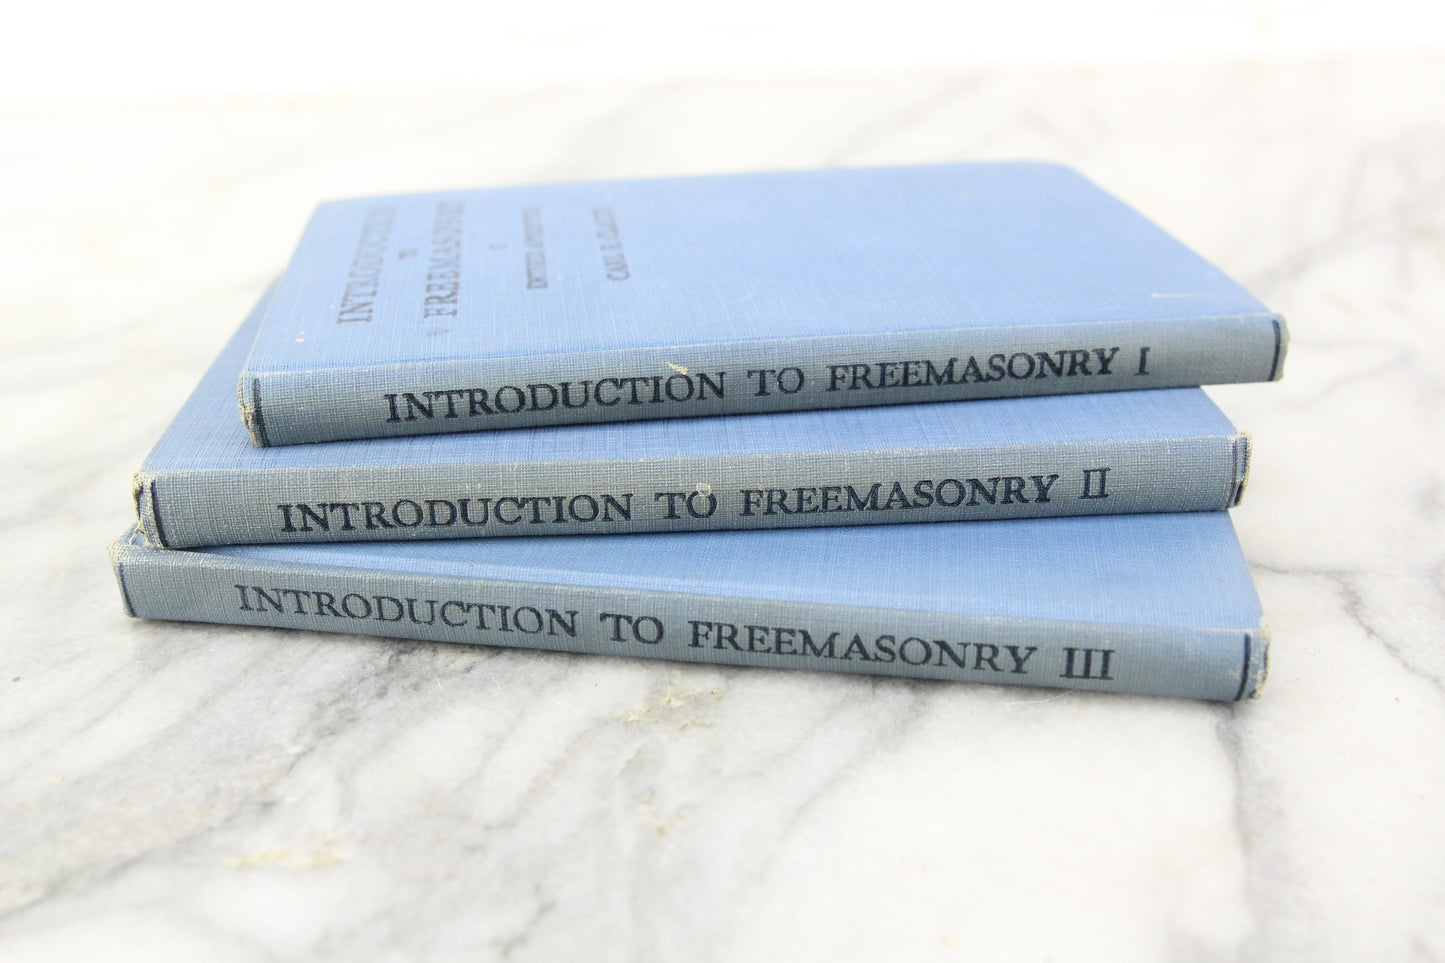 Introduction to Freemasonry by Carl H. Claudy, Three Volume Set, Copyright 1942